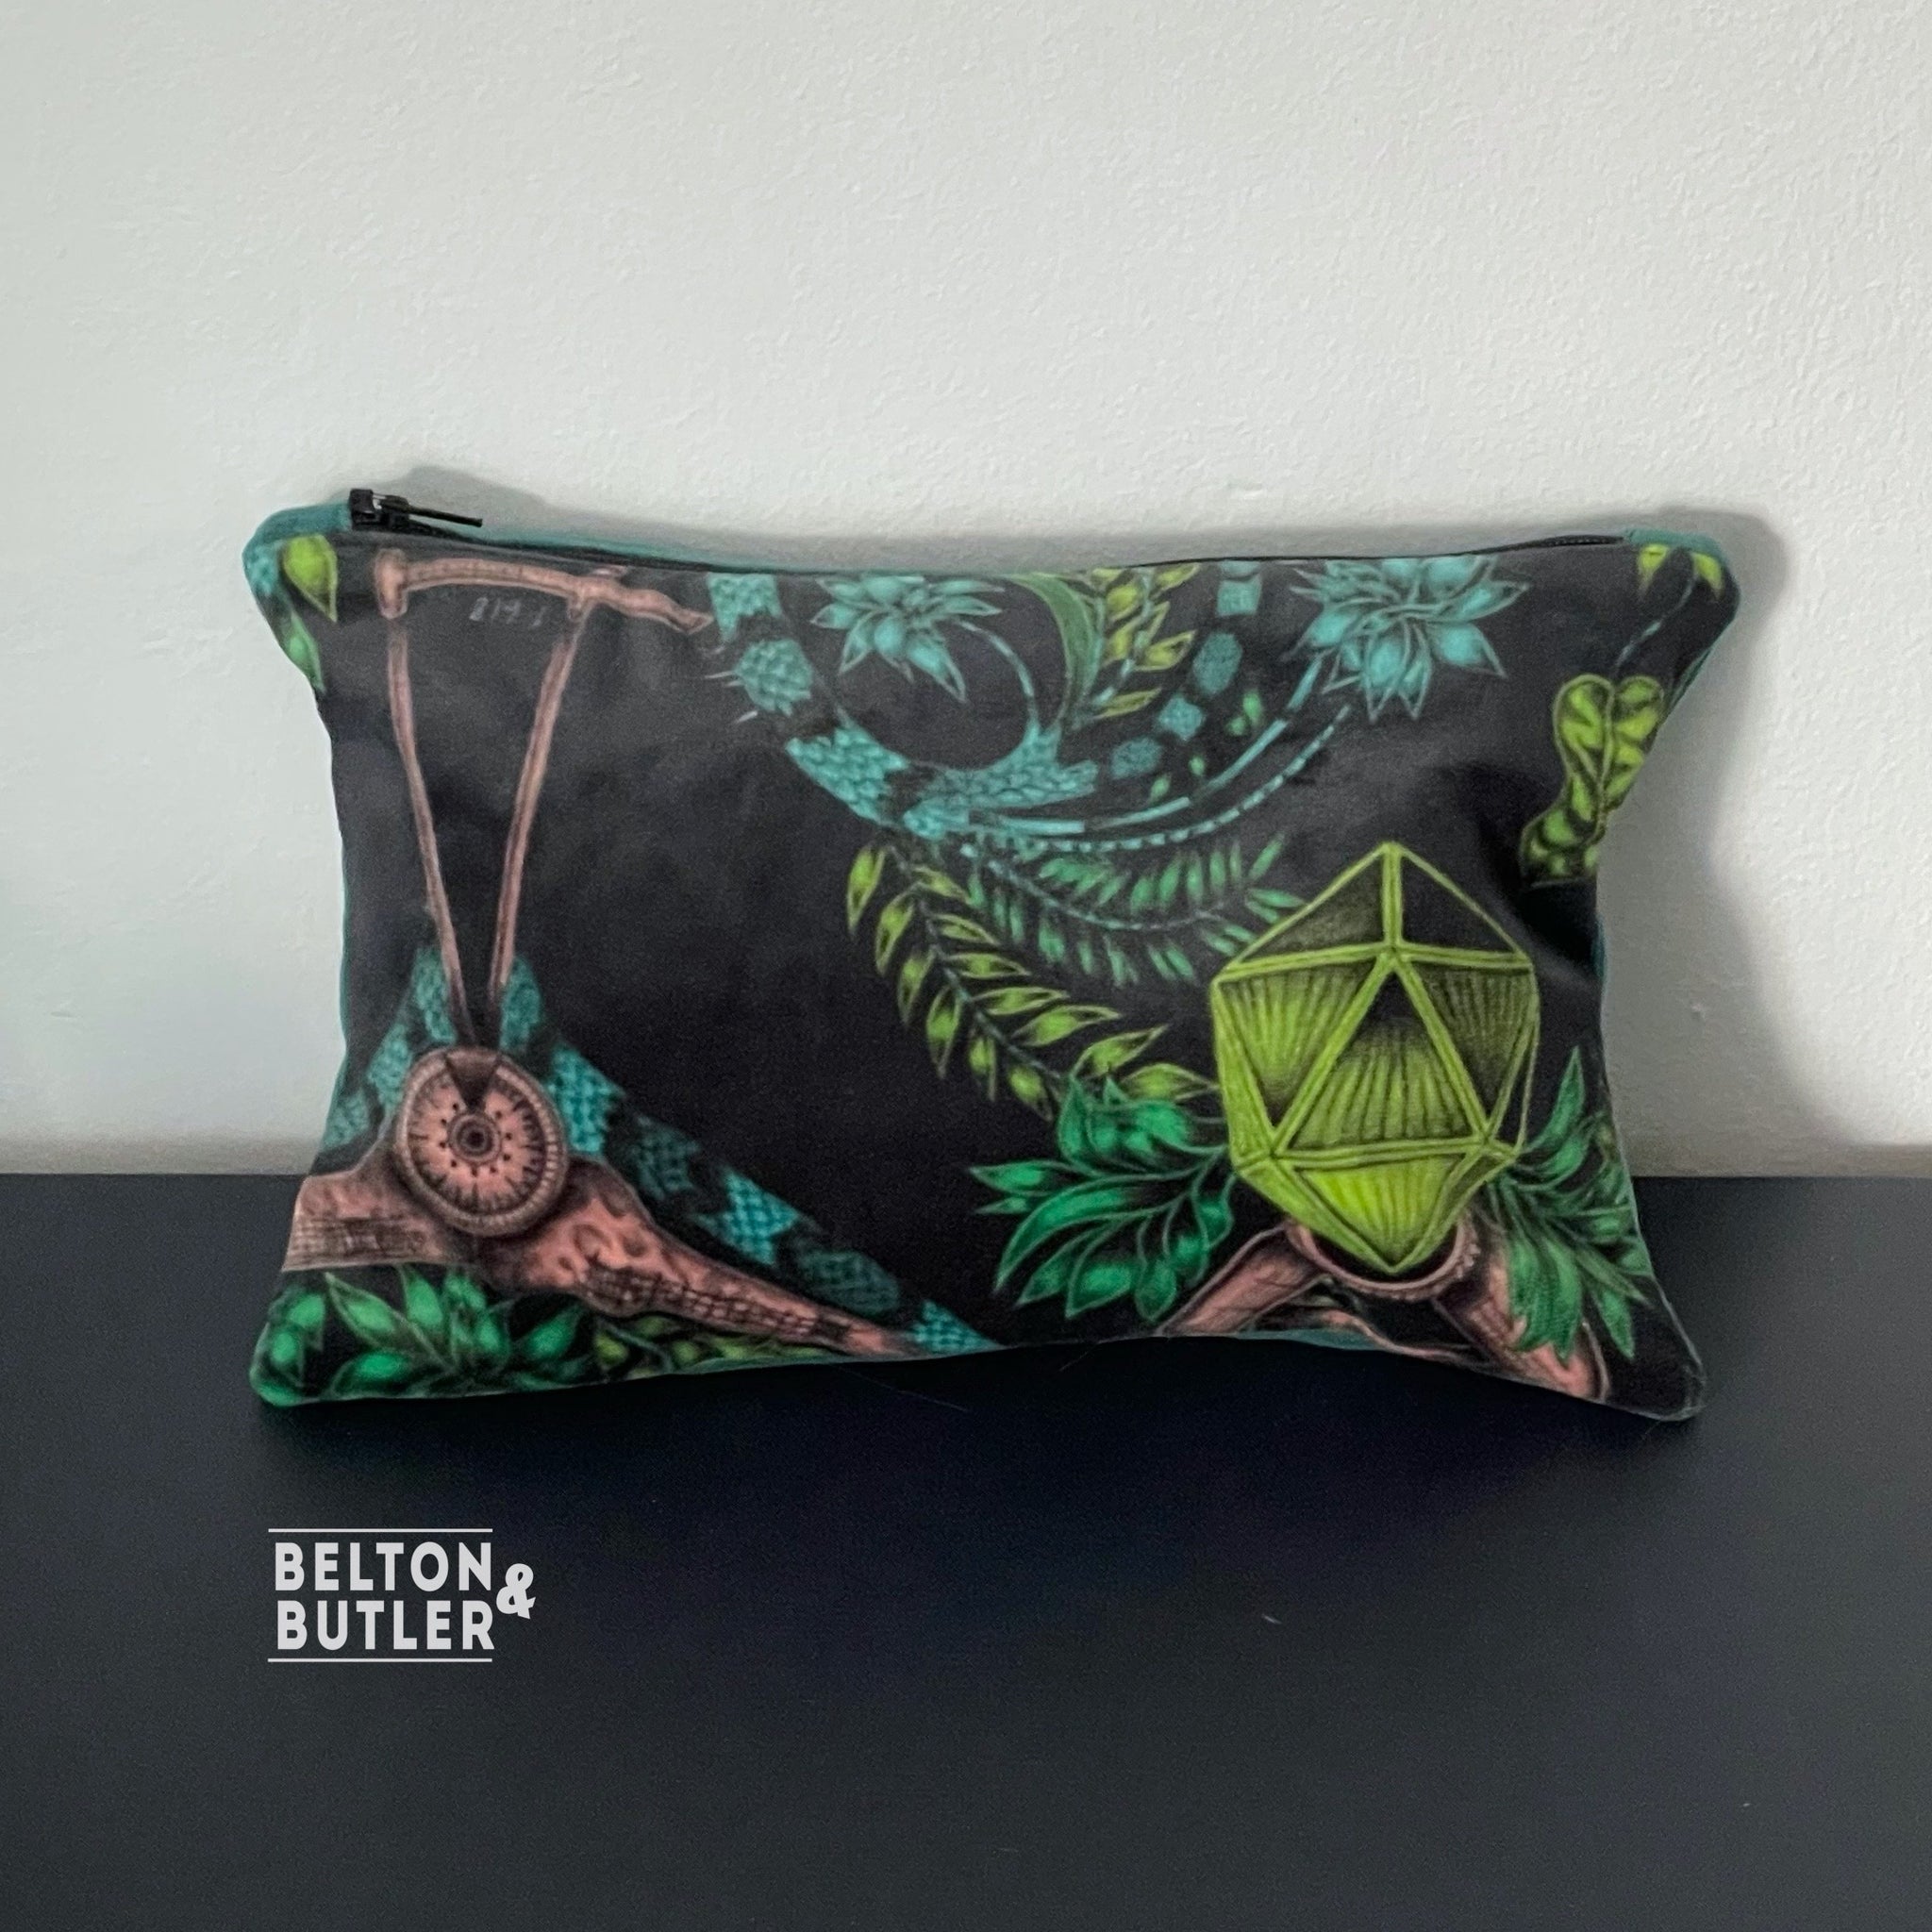 Handmade Make Up / Travel Toiletries Bag in “Silverback” Velvet Fabric by Emma Shipley-Belton & Butler